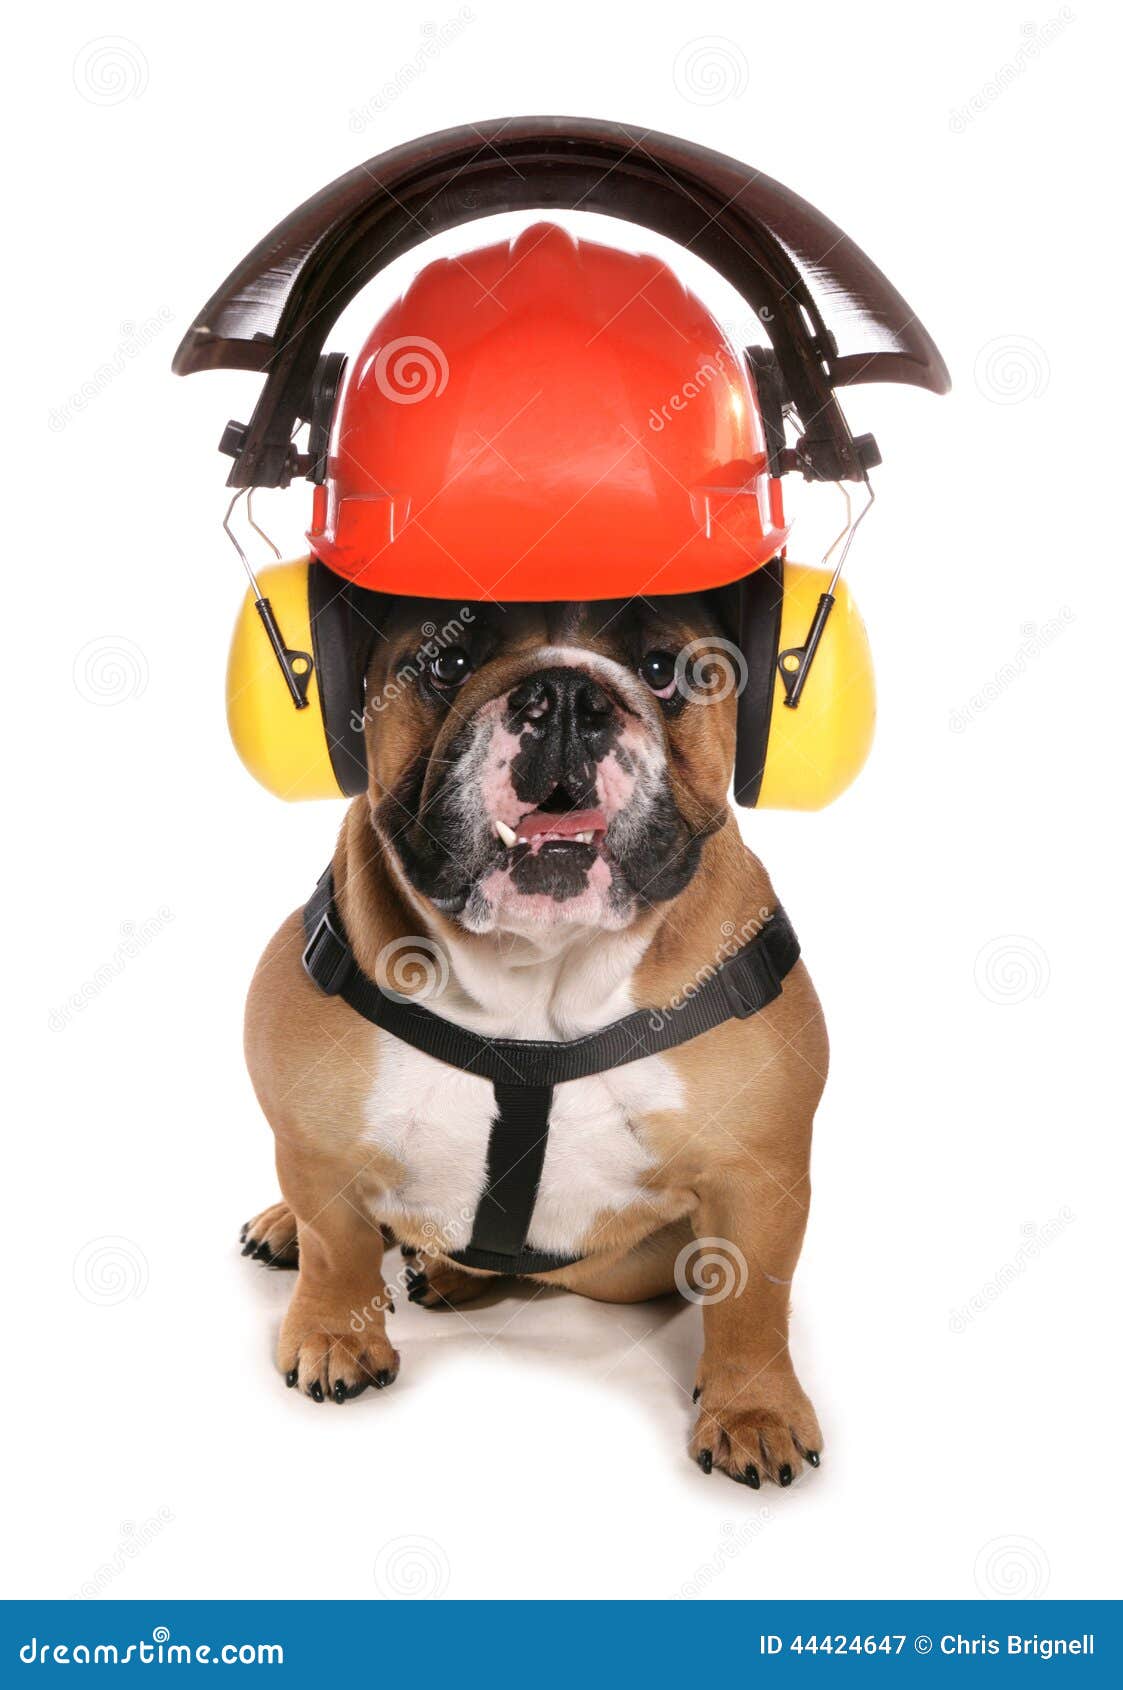 bulldog wearing protective workwear hat